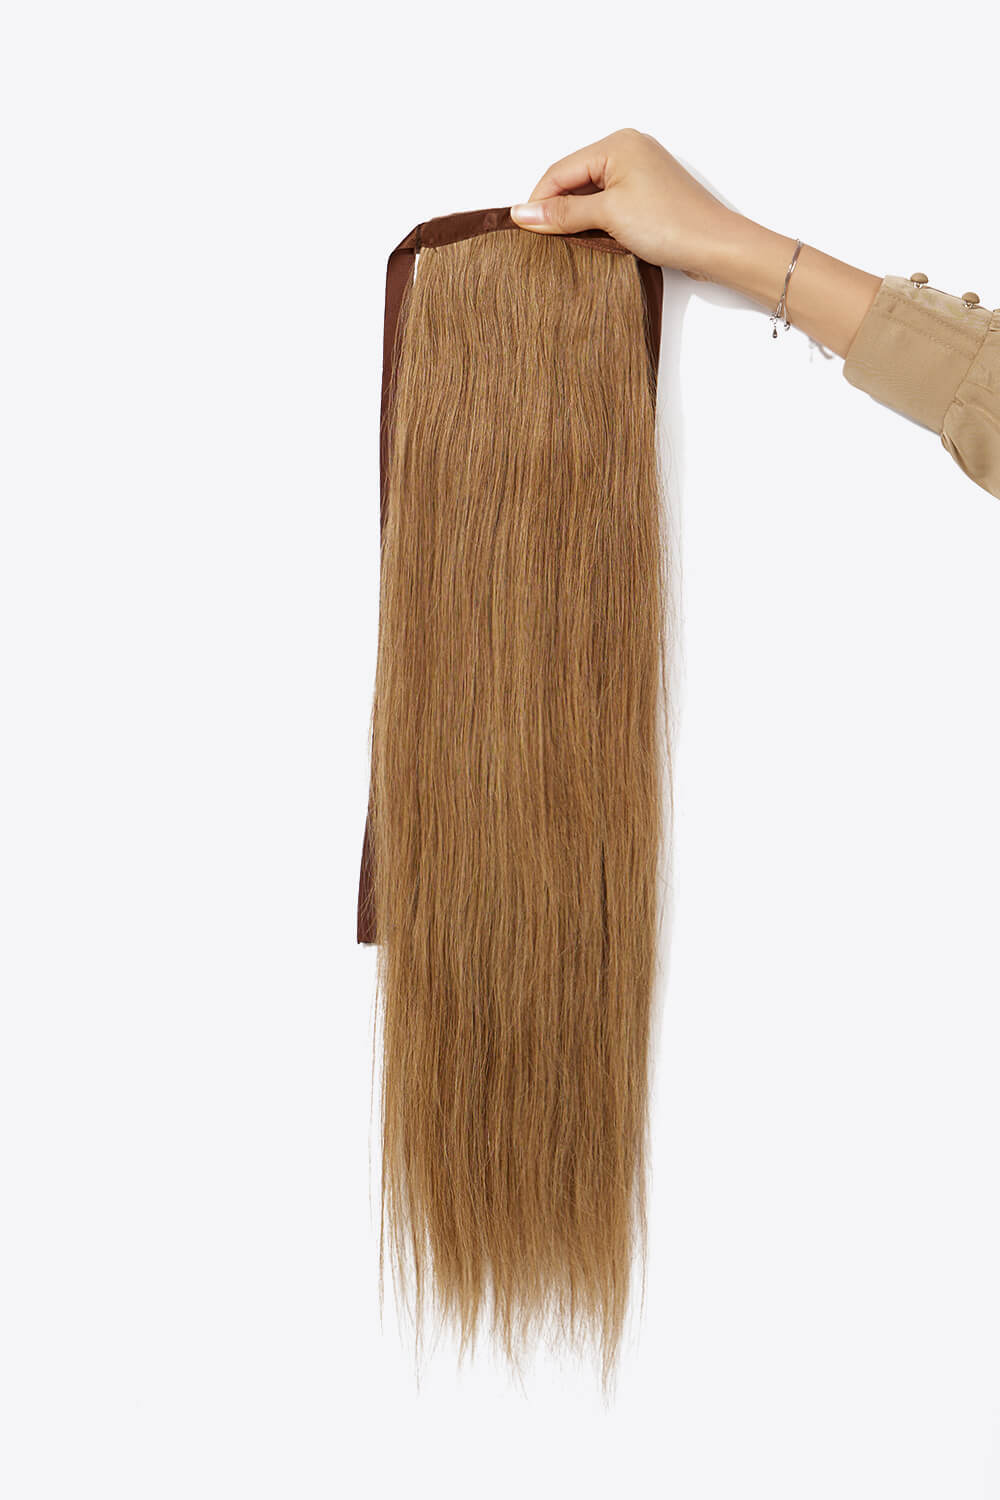 24" 130g #10 Ponytail Straight Human Hair - PINKCOLADA-Beauty-101301440618193